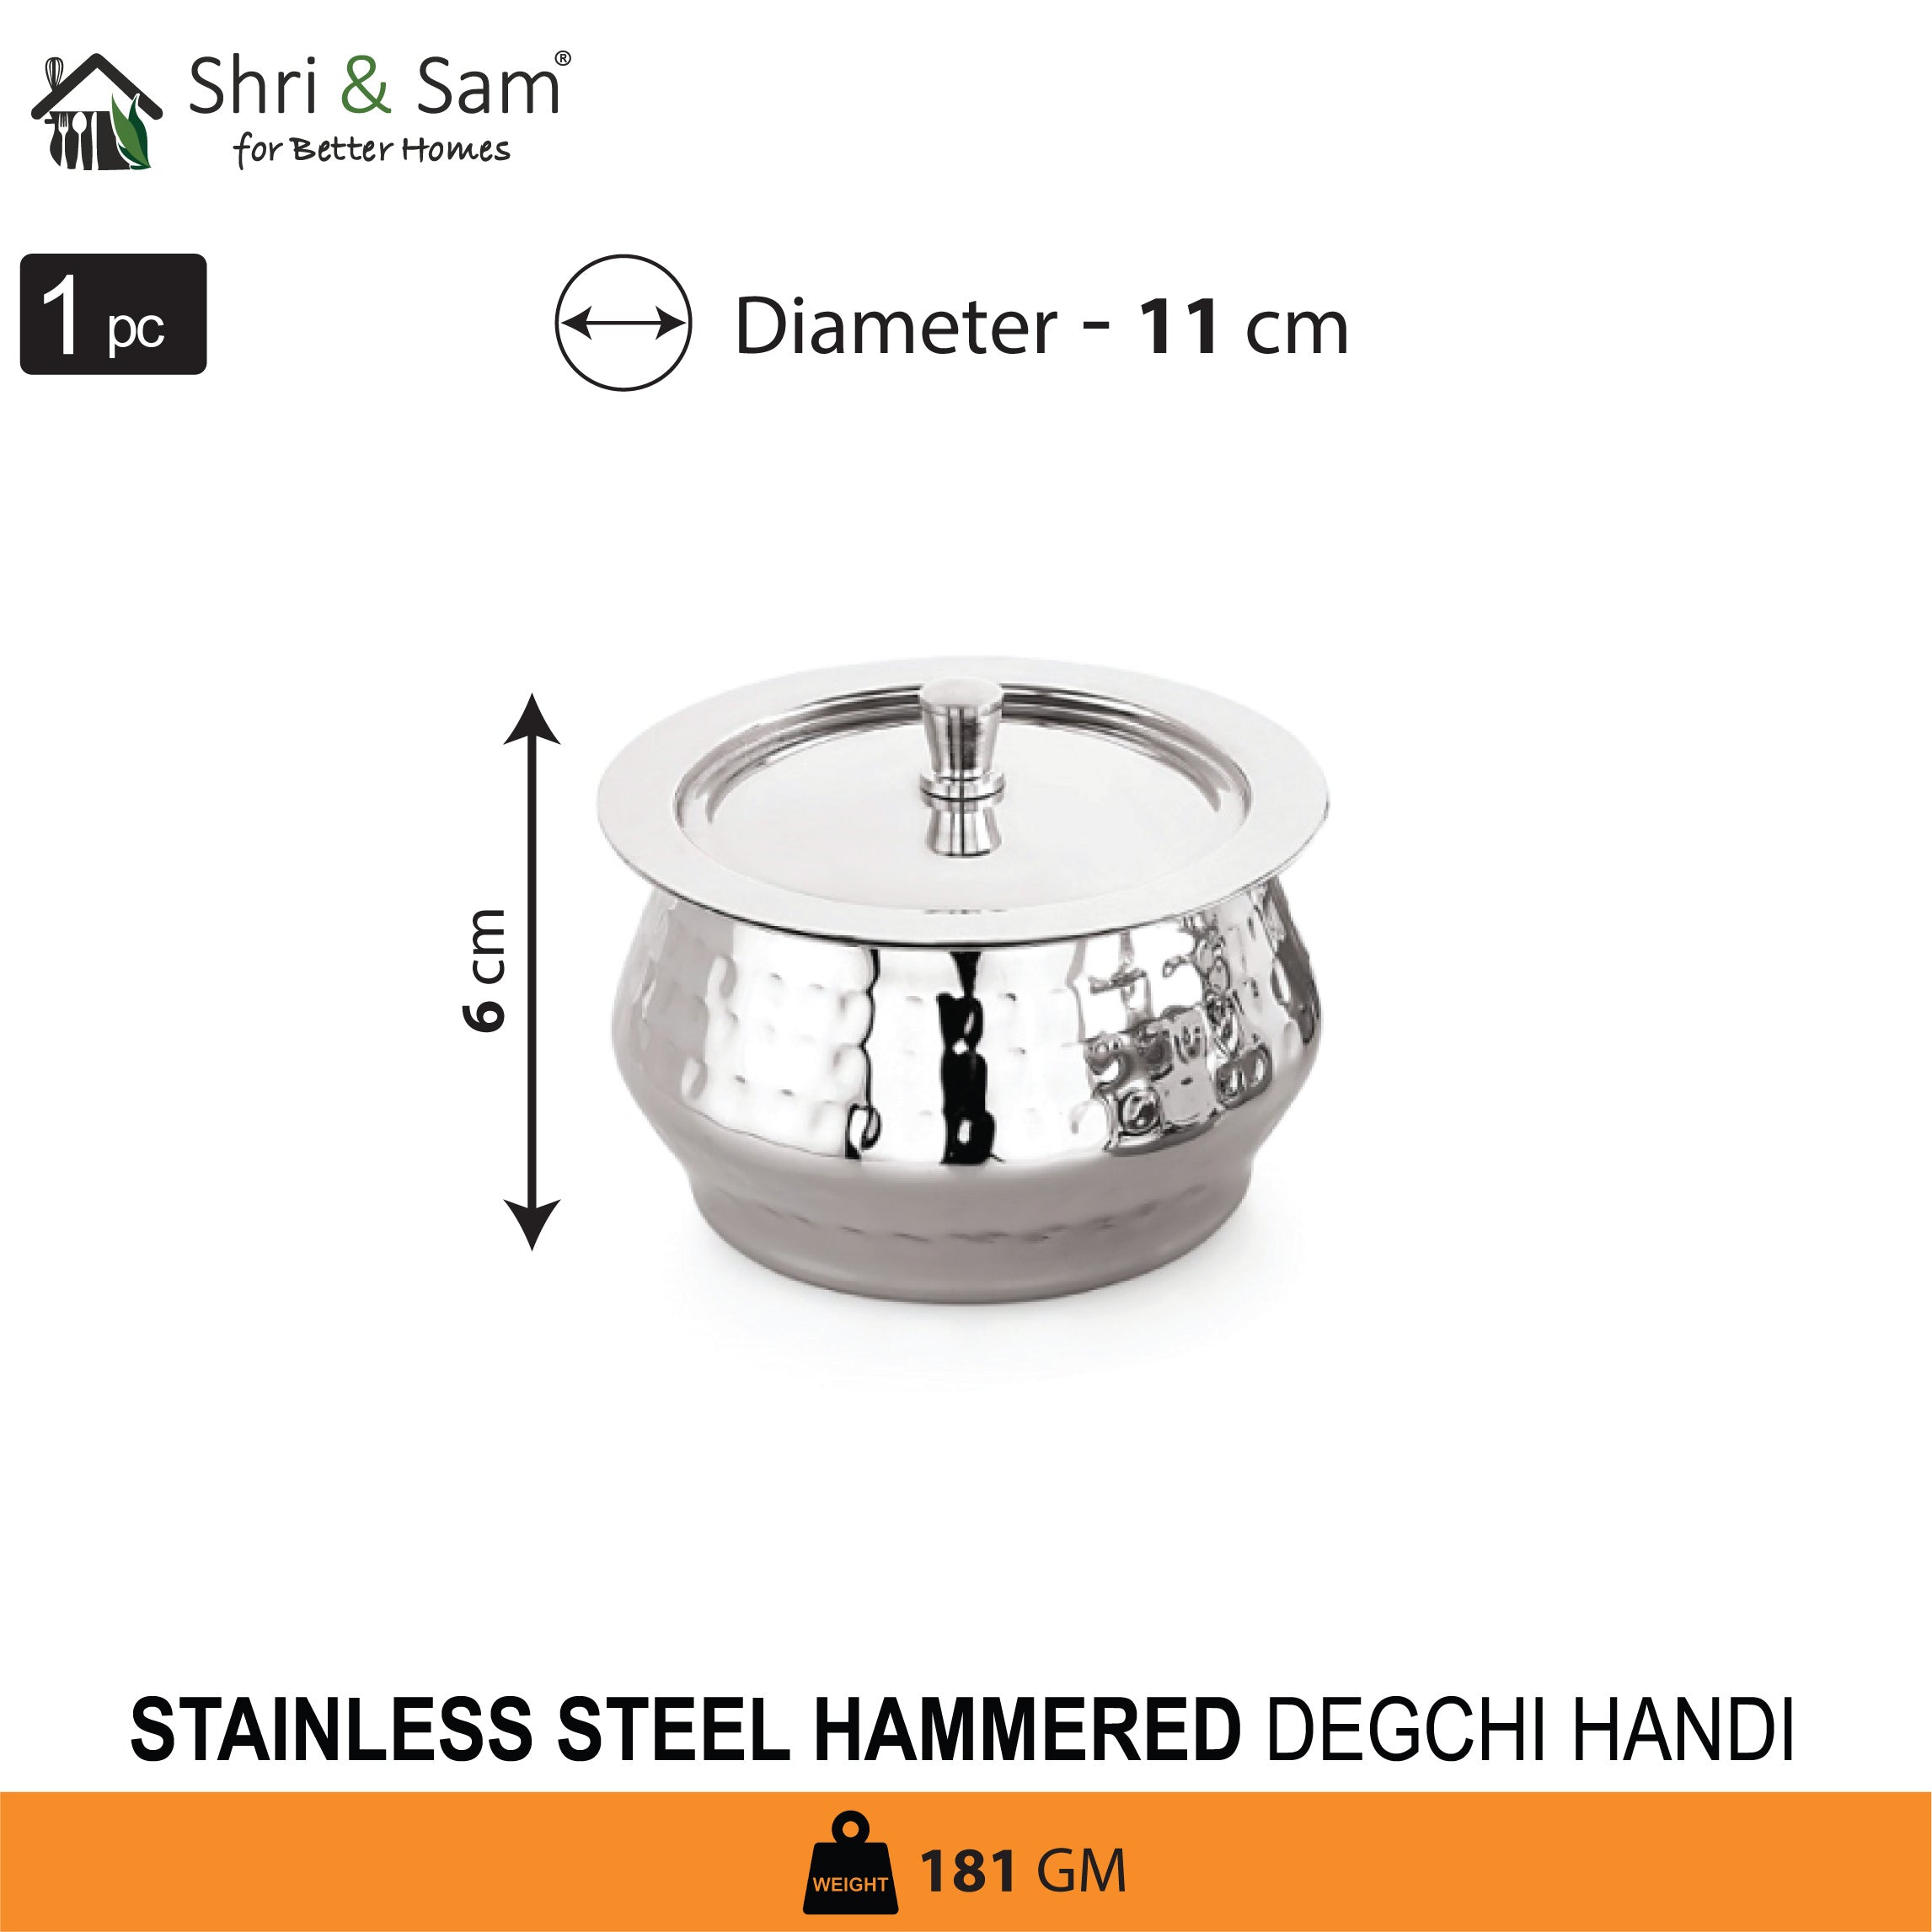 Stainless Steel Hammered Degchi Handi